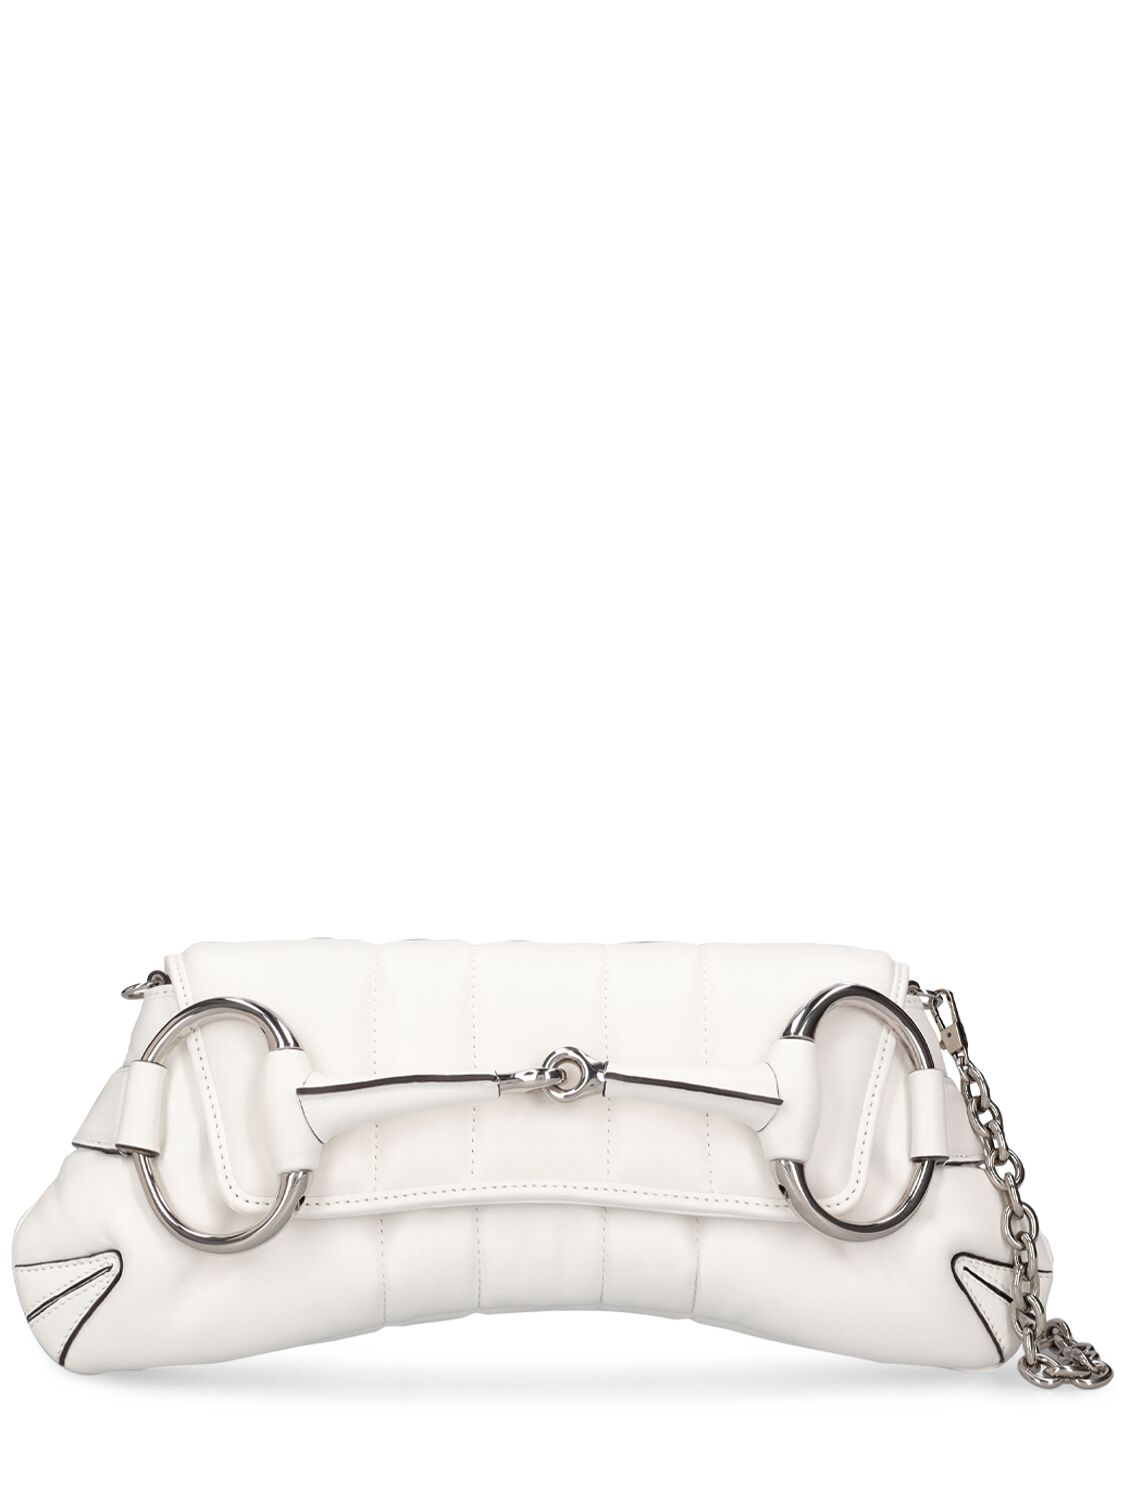 Gucci Medium  Horsebit Chain Leather Bag In Great White